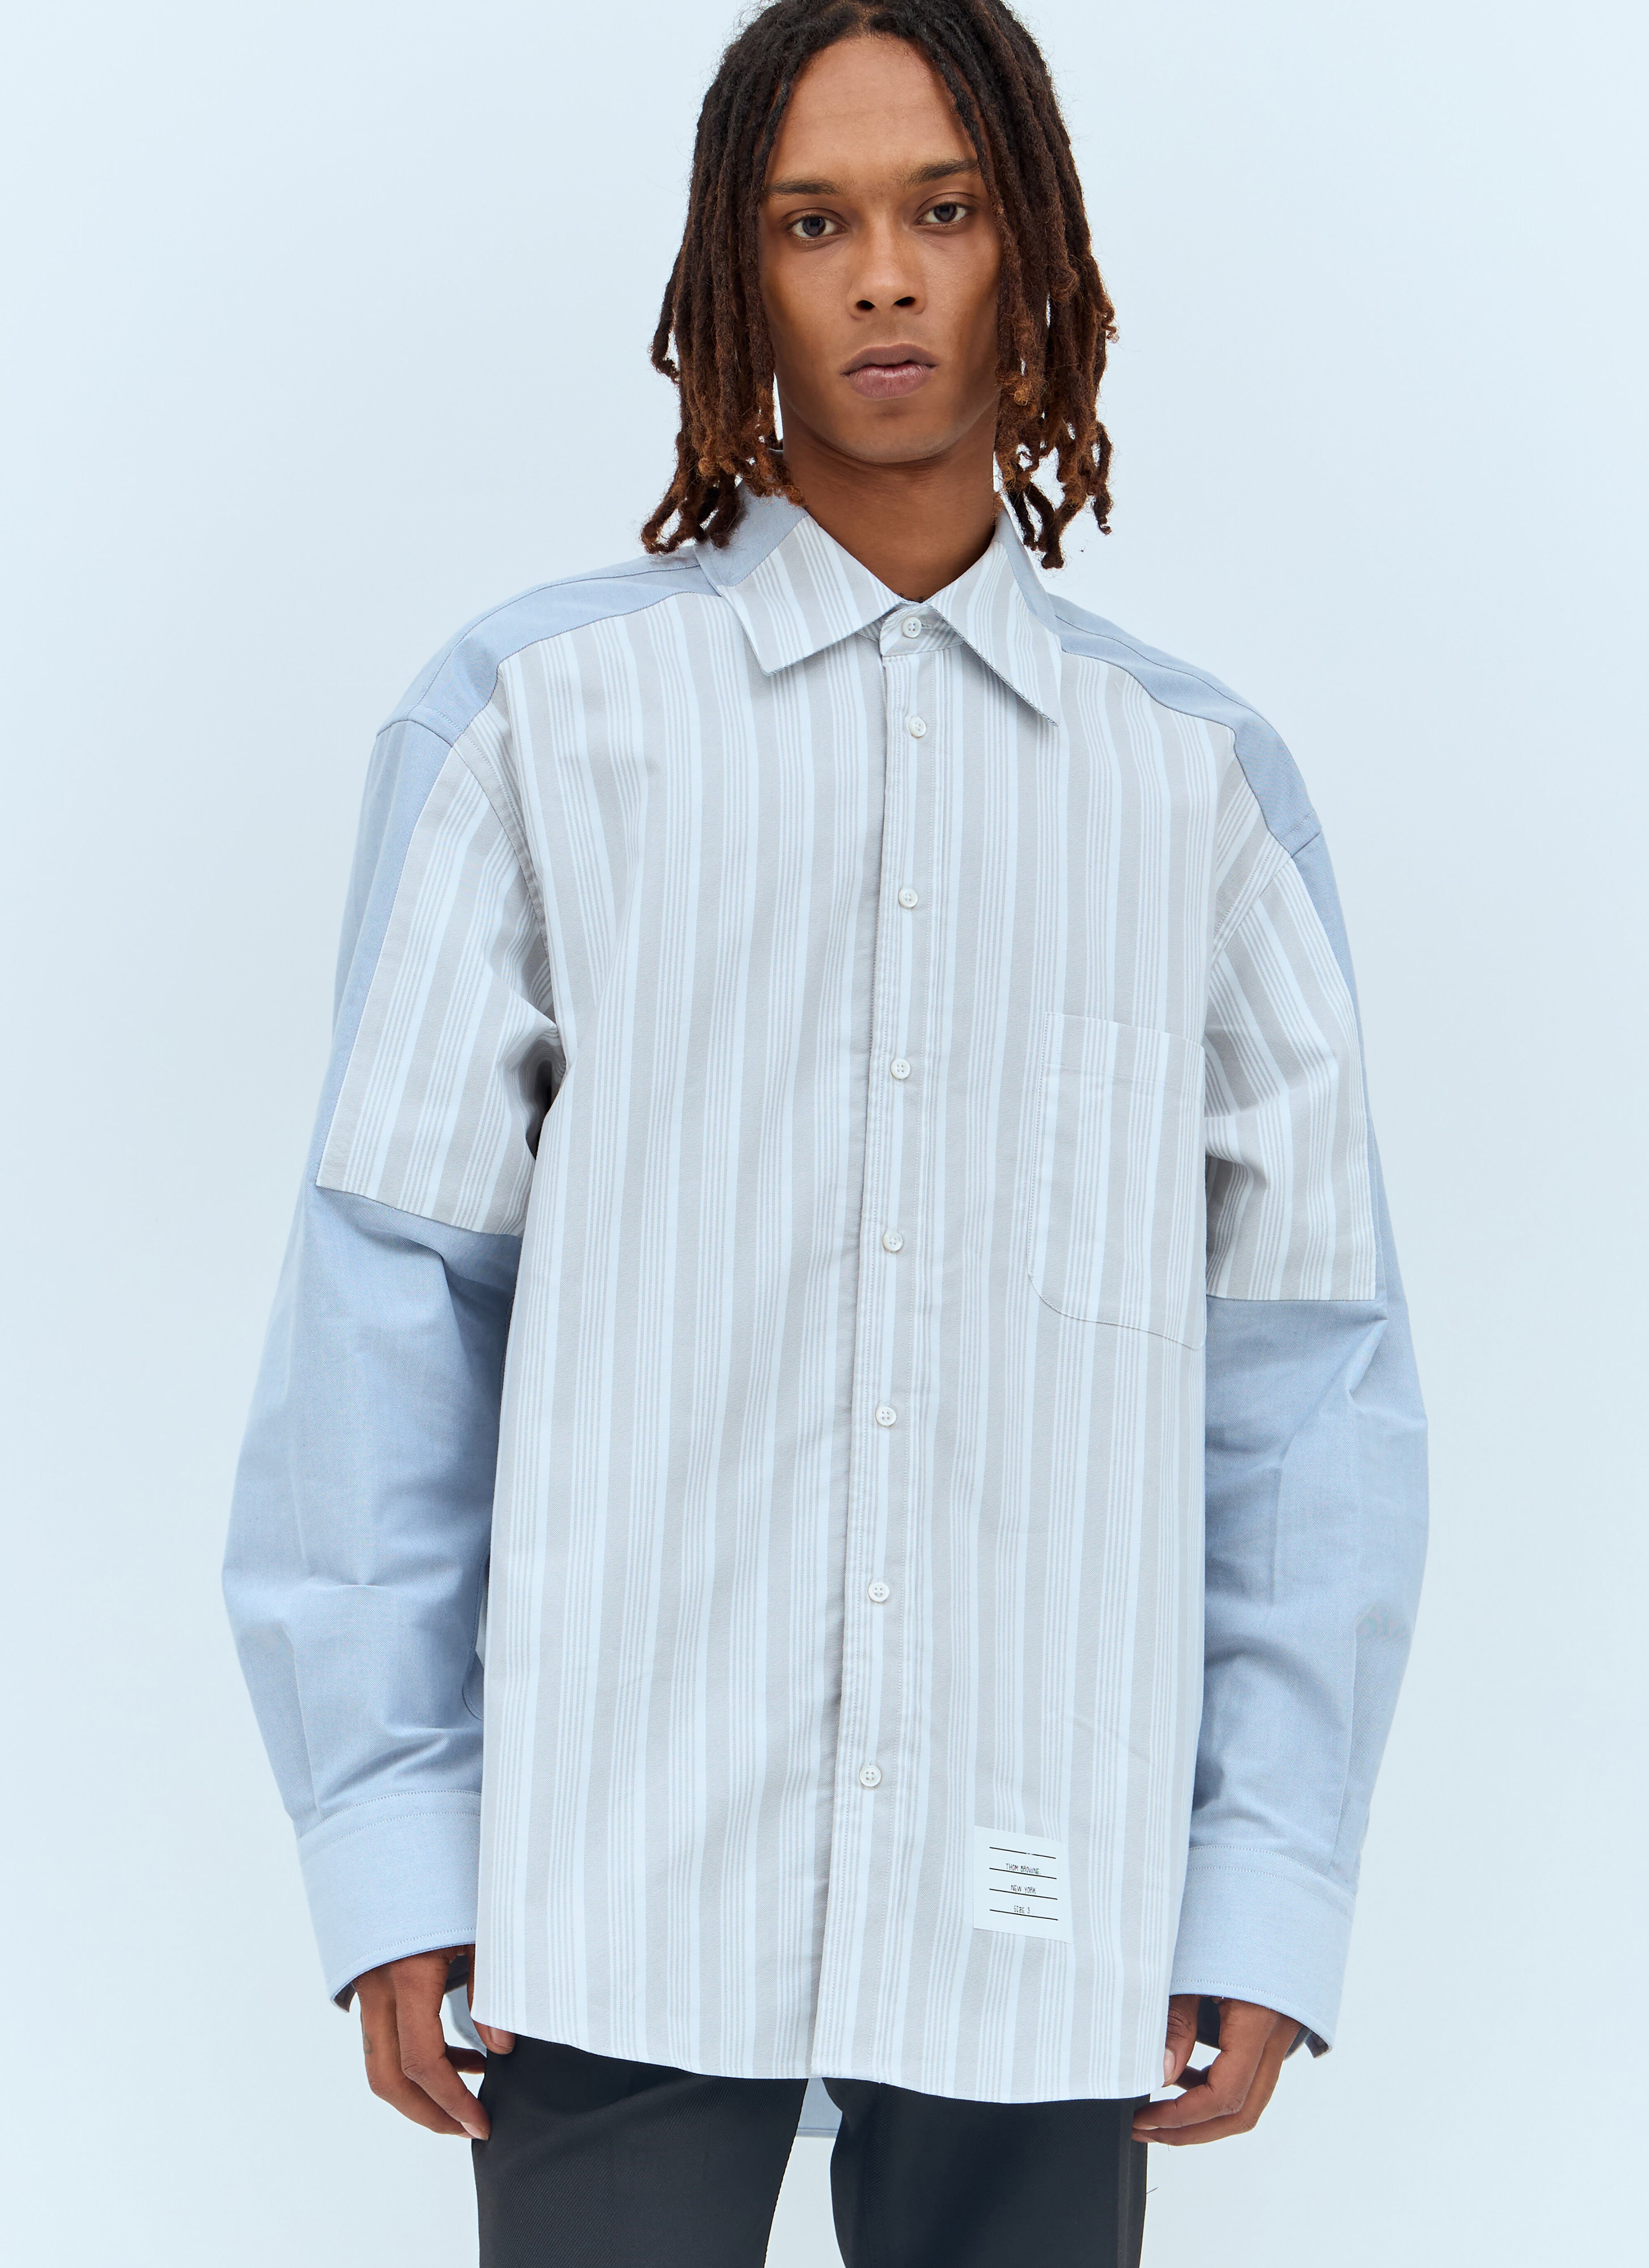 Acne Studios Oversized Striped Shirt White acn0157009